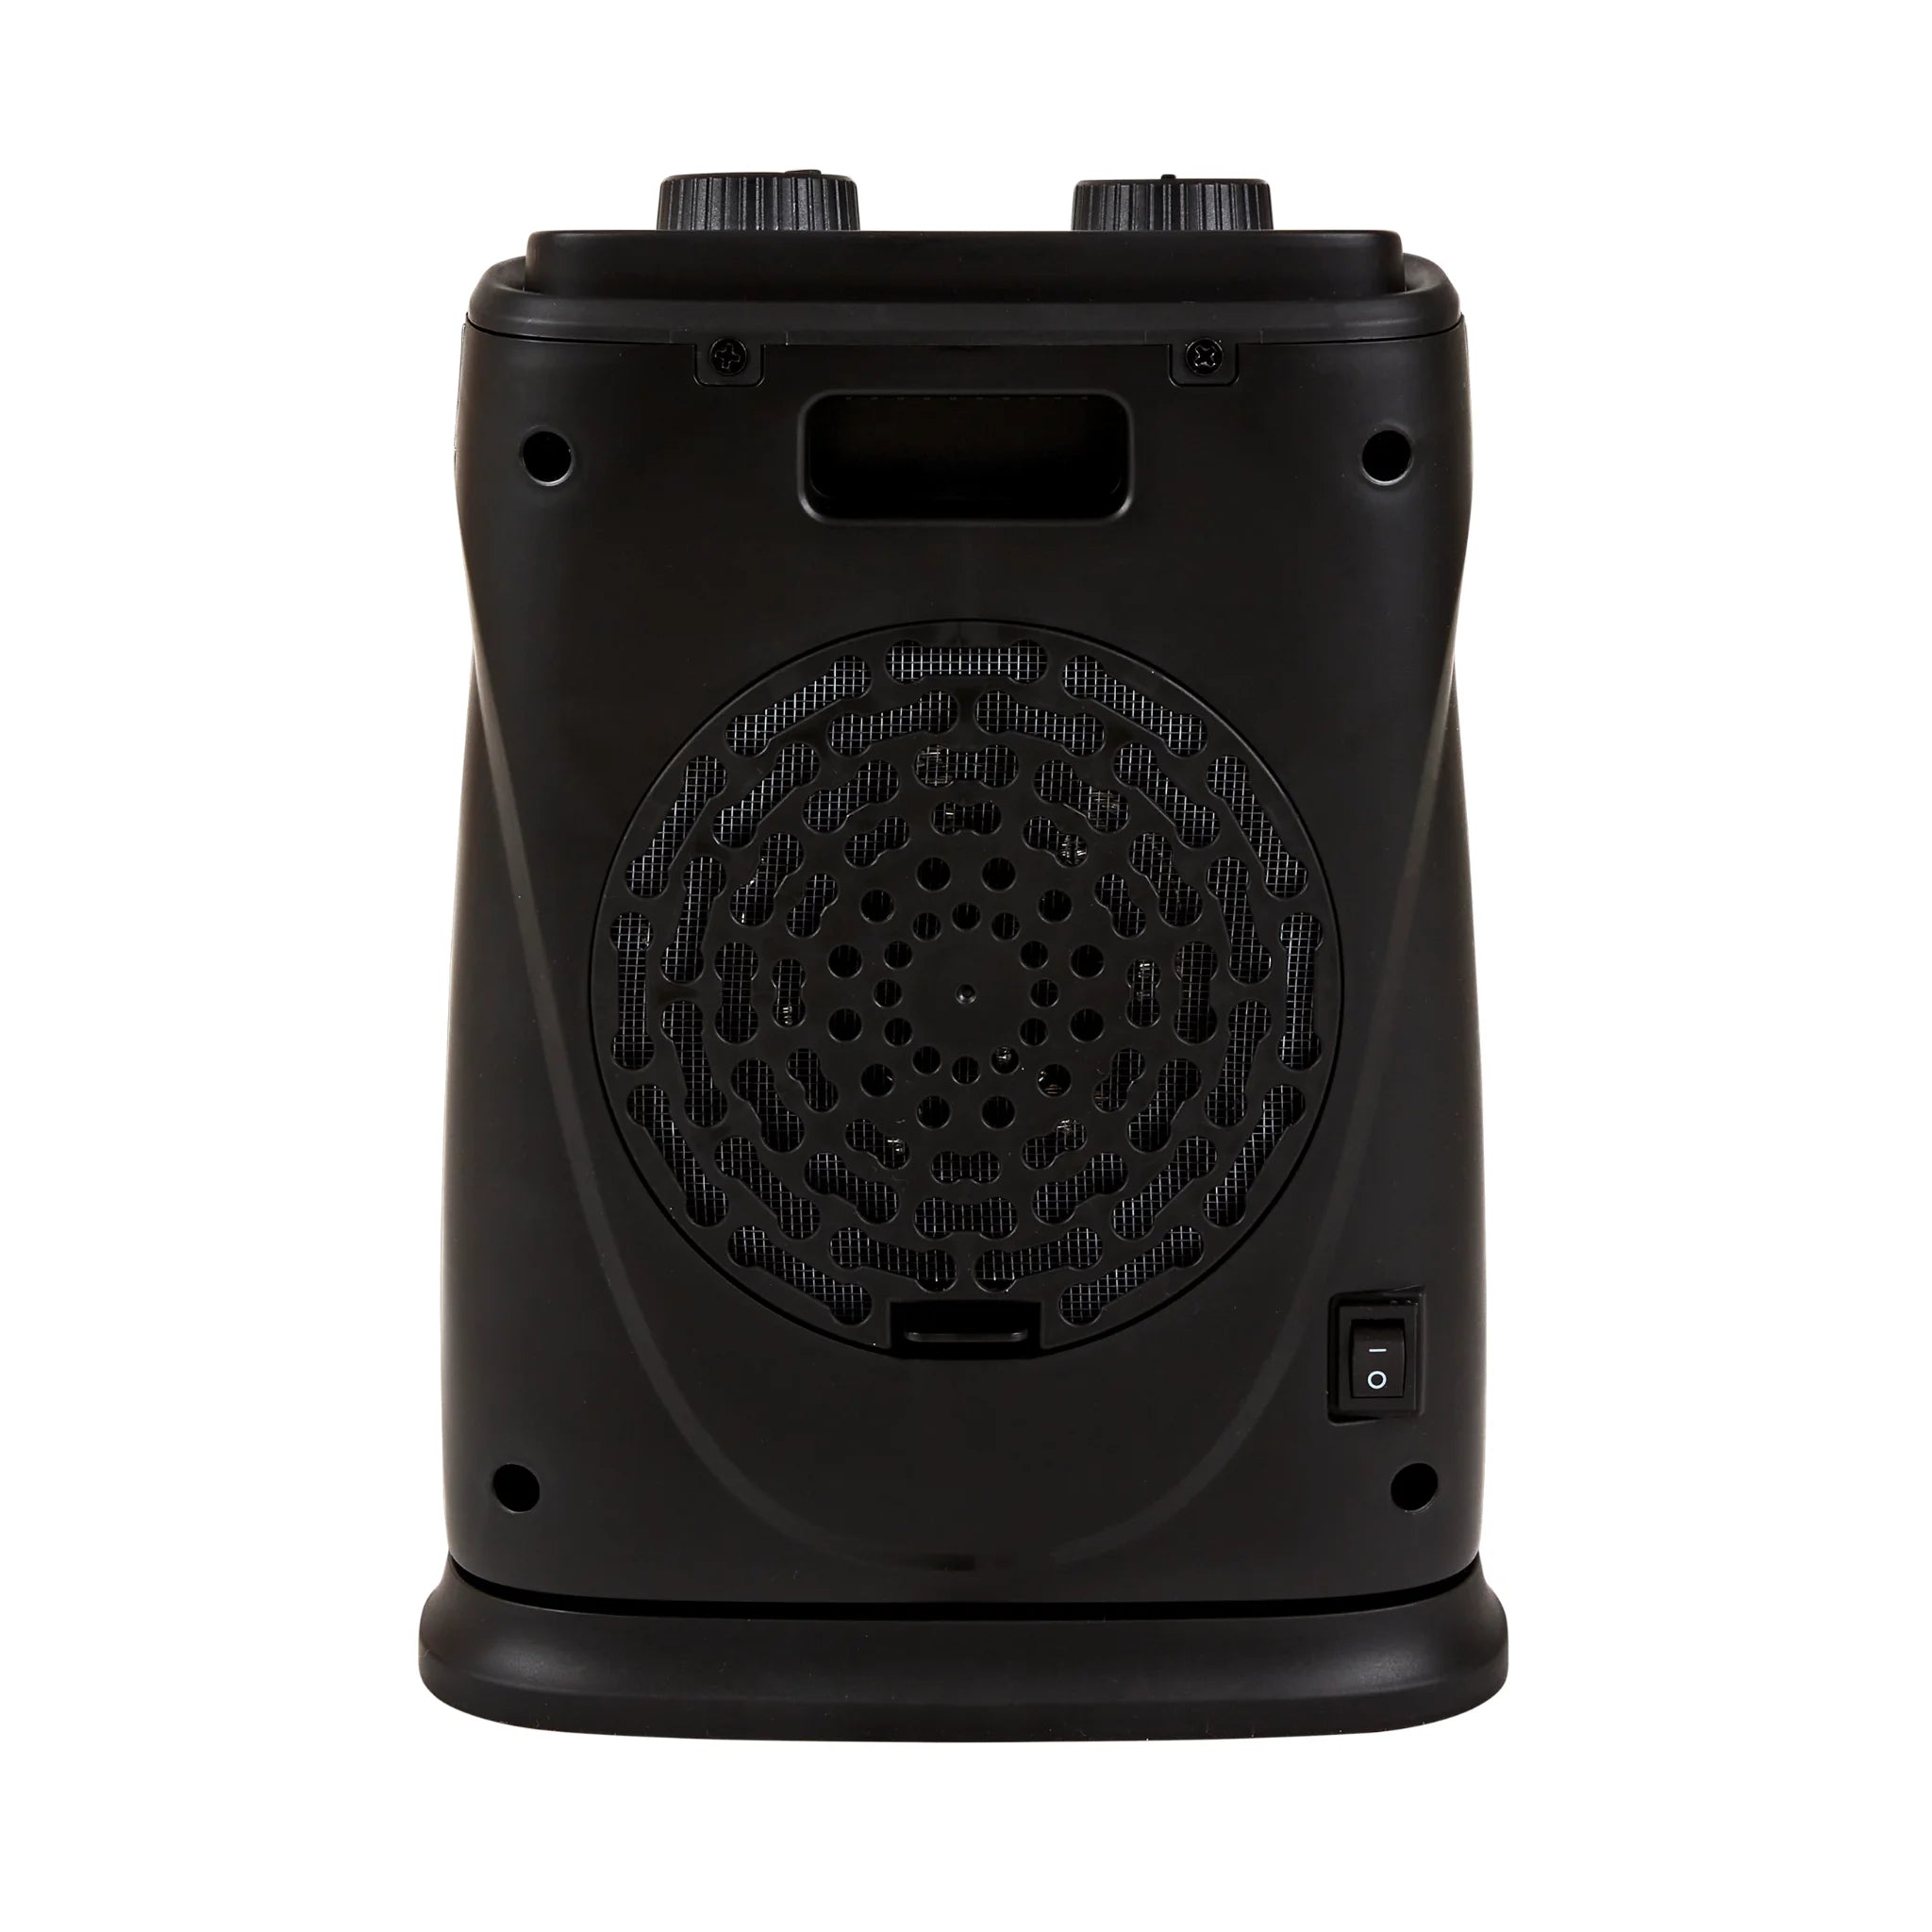 Senelux Portable Mini Ceramic heater all black back design with energy efficient power cord.